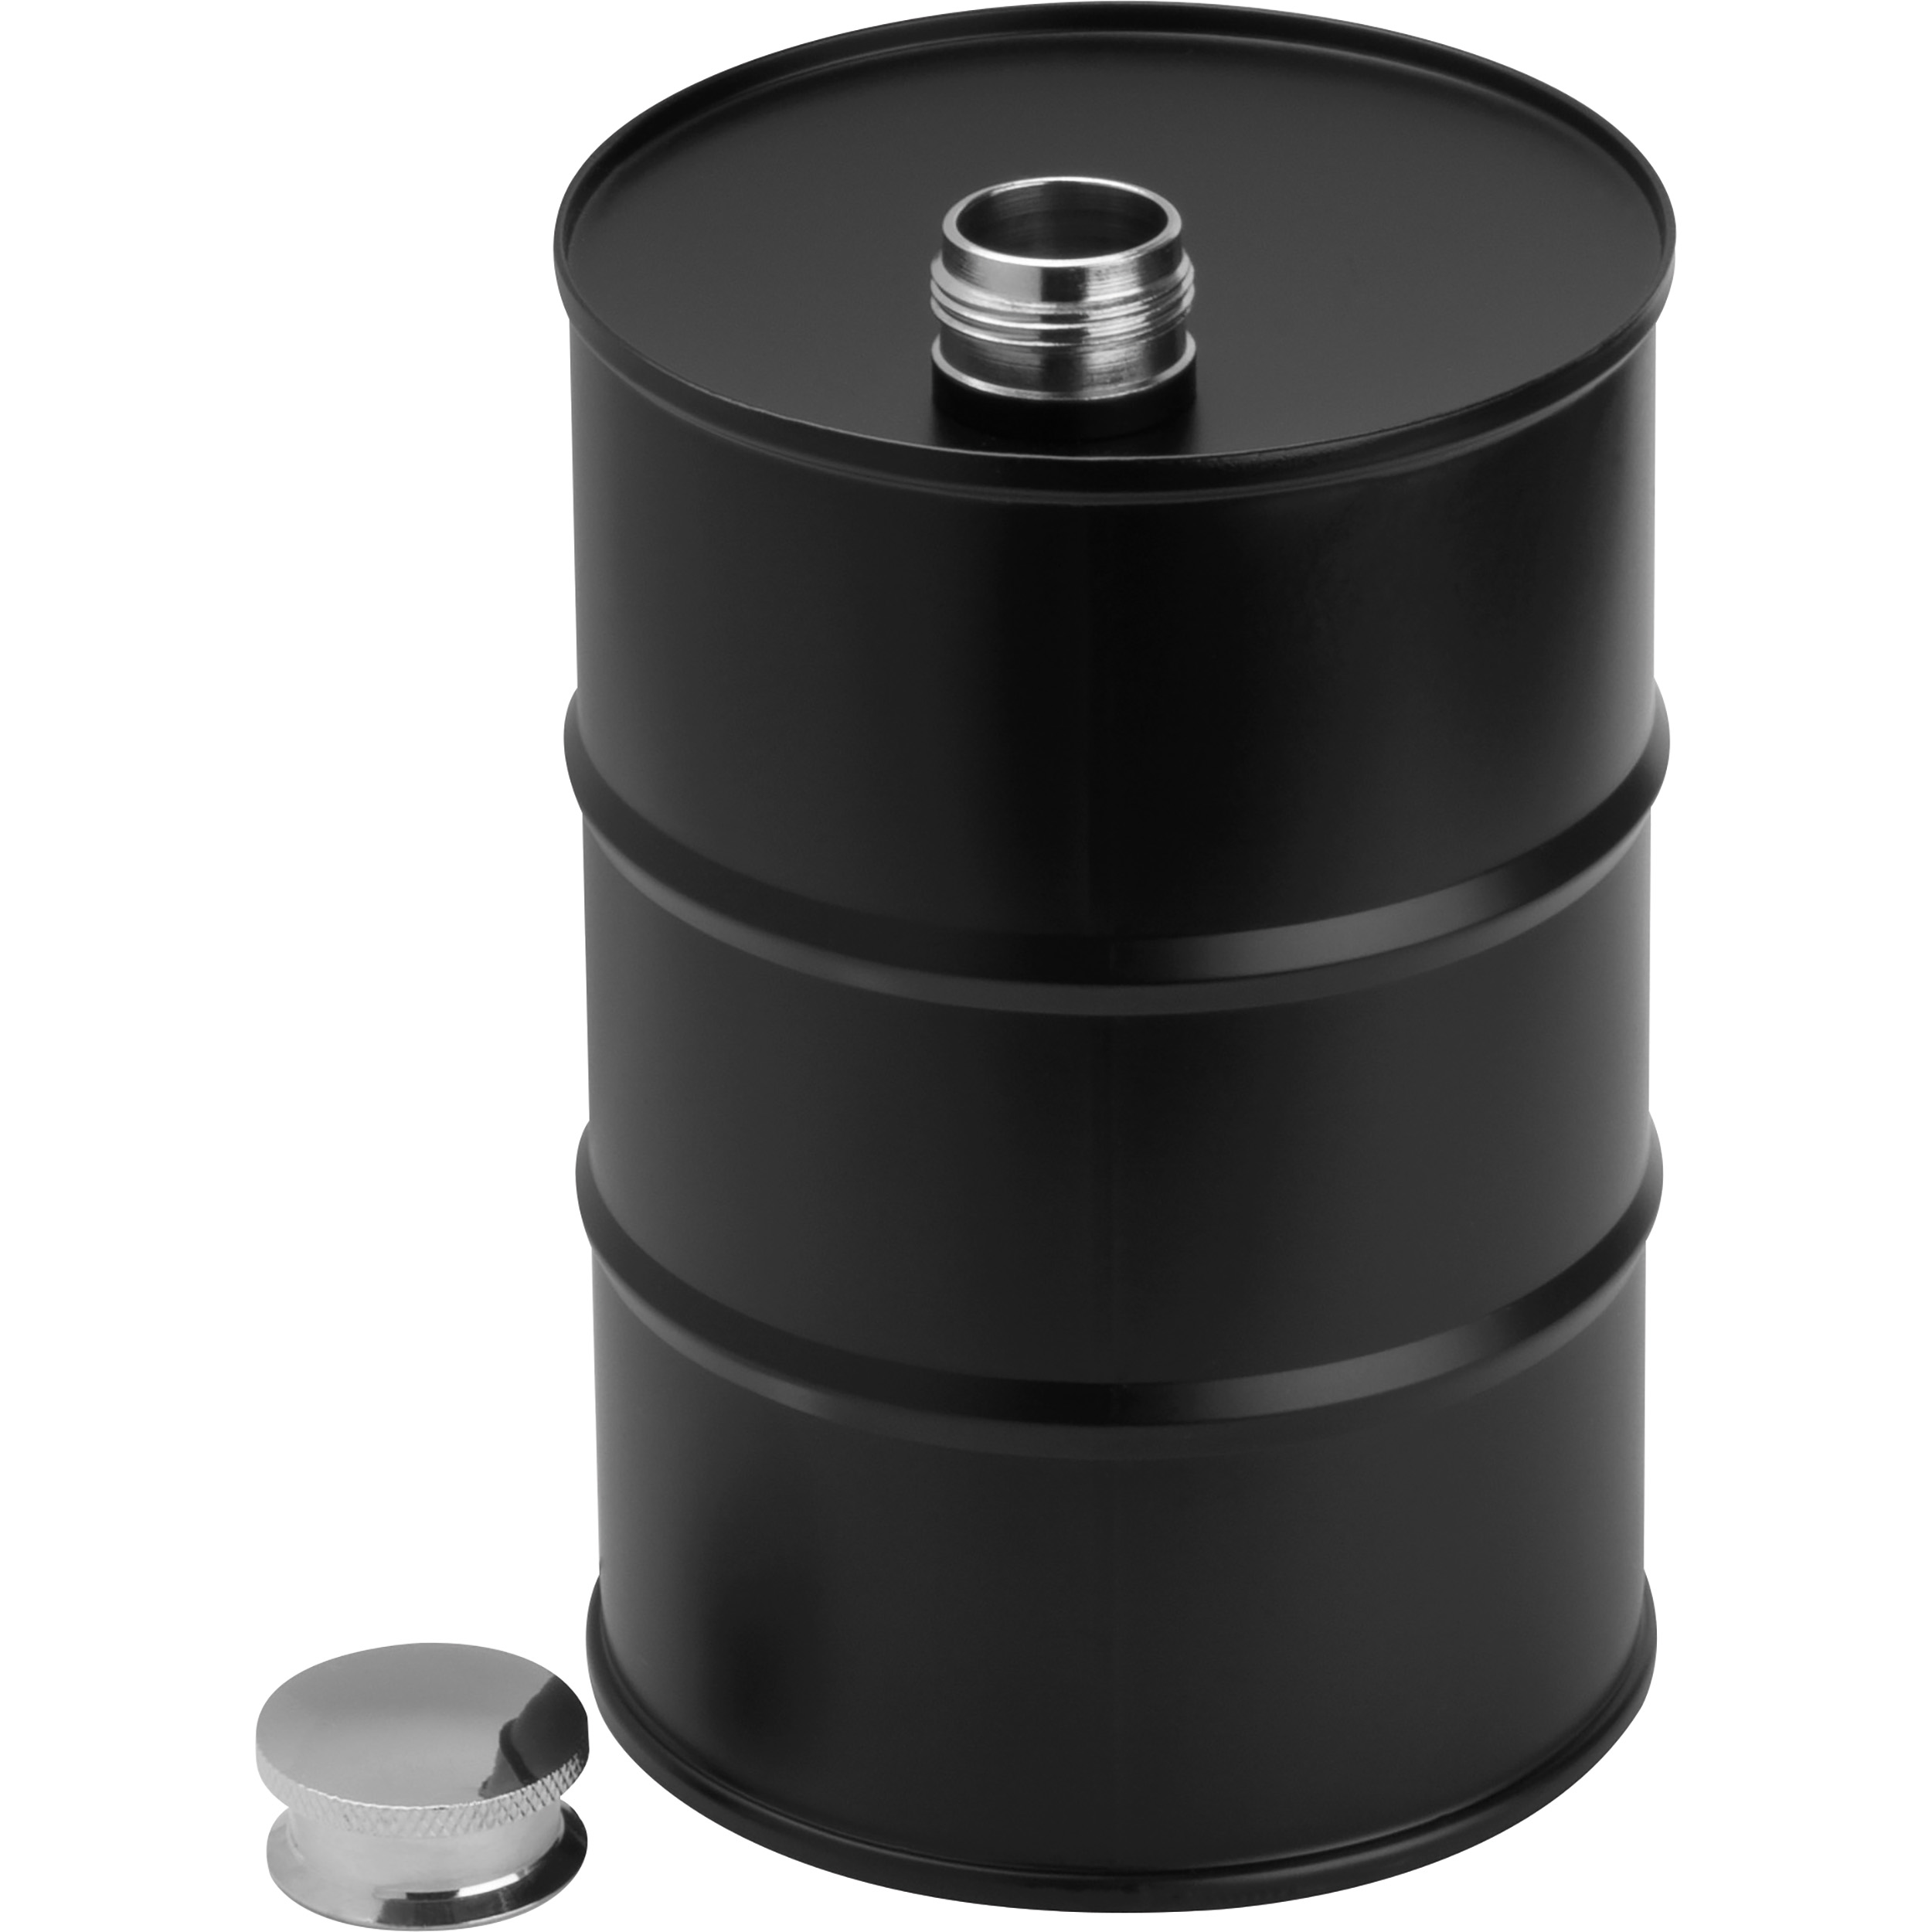 Hip flask barrel